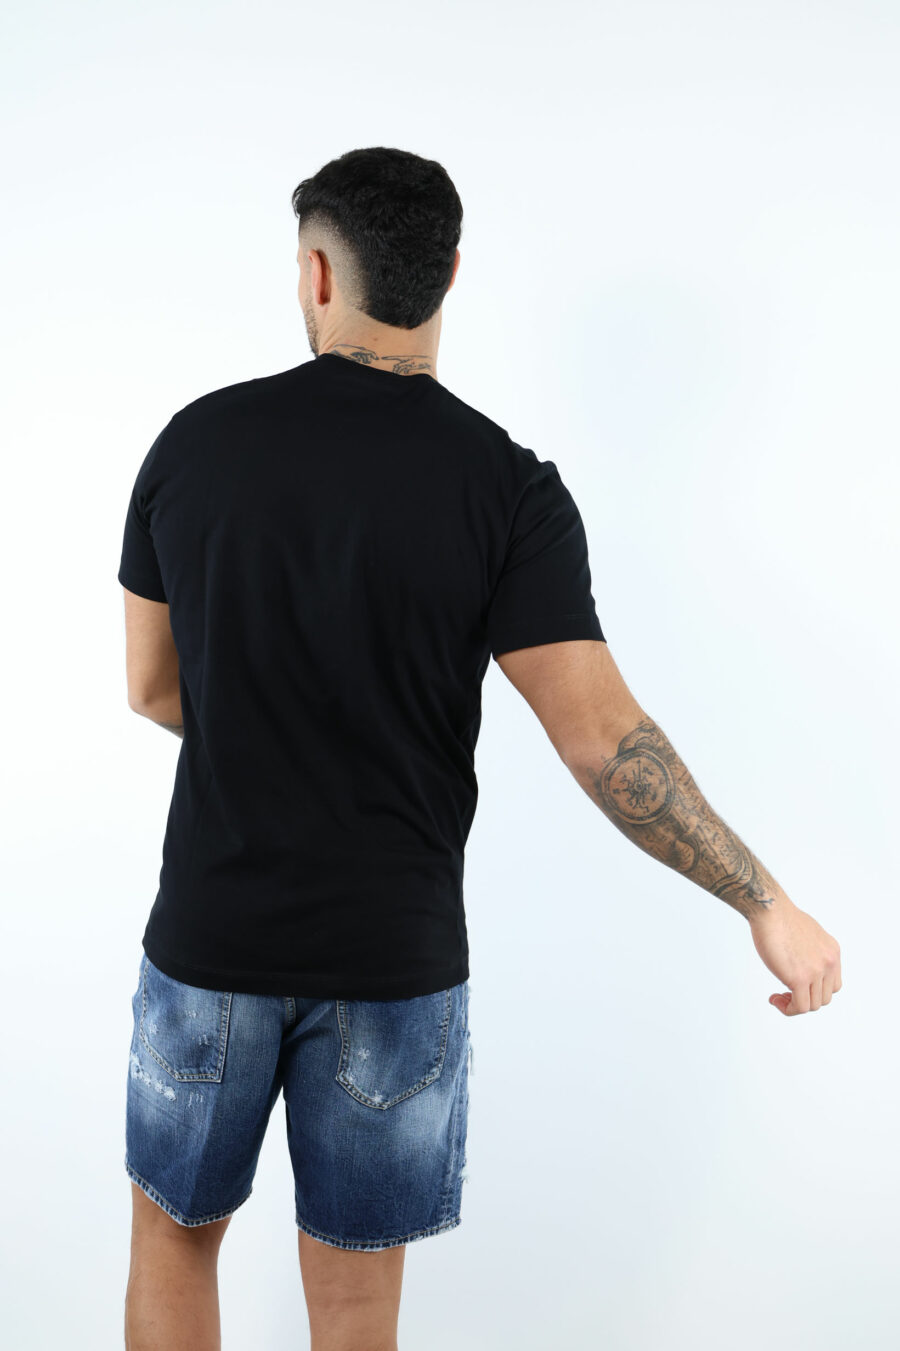 T-shirt preta com maxilogo "ceresio 9 milano" - 106864